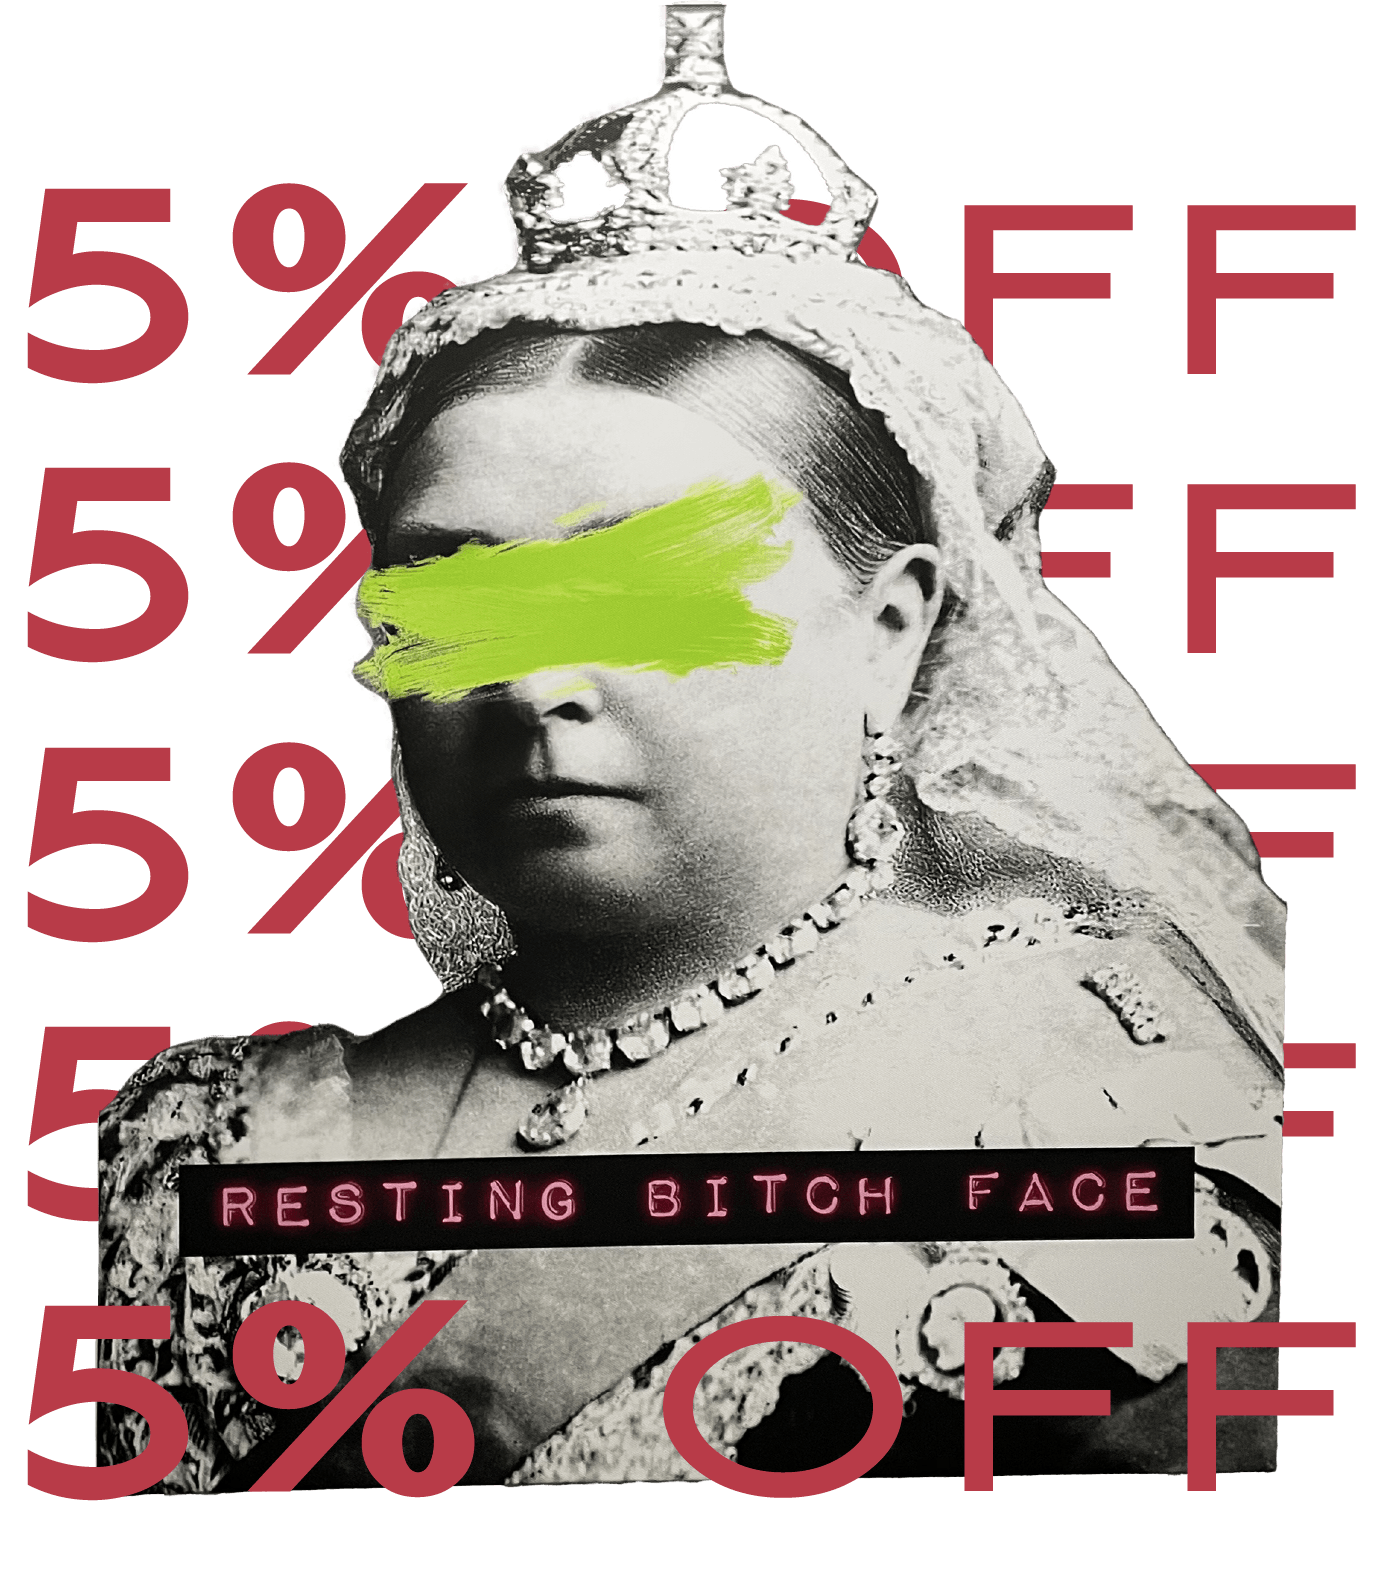 5% off